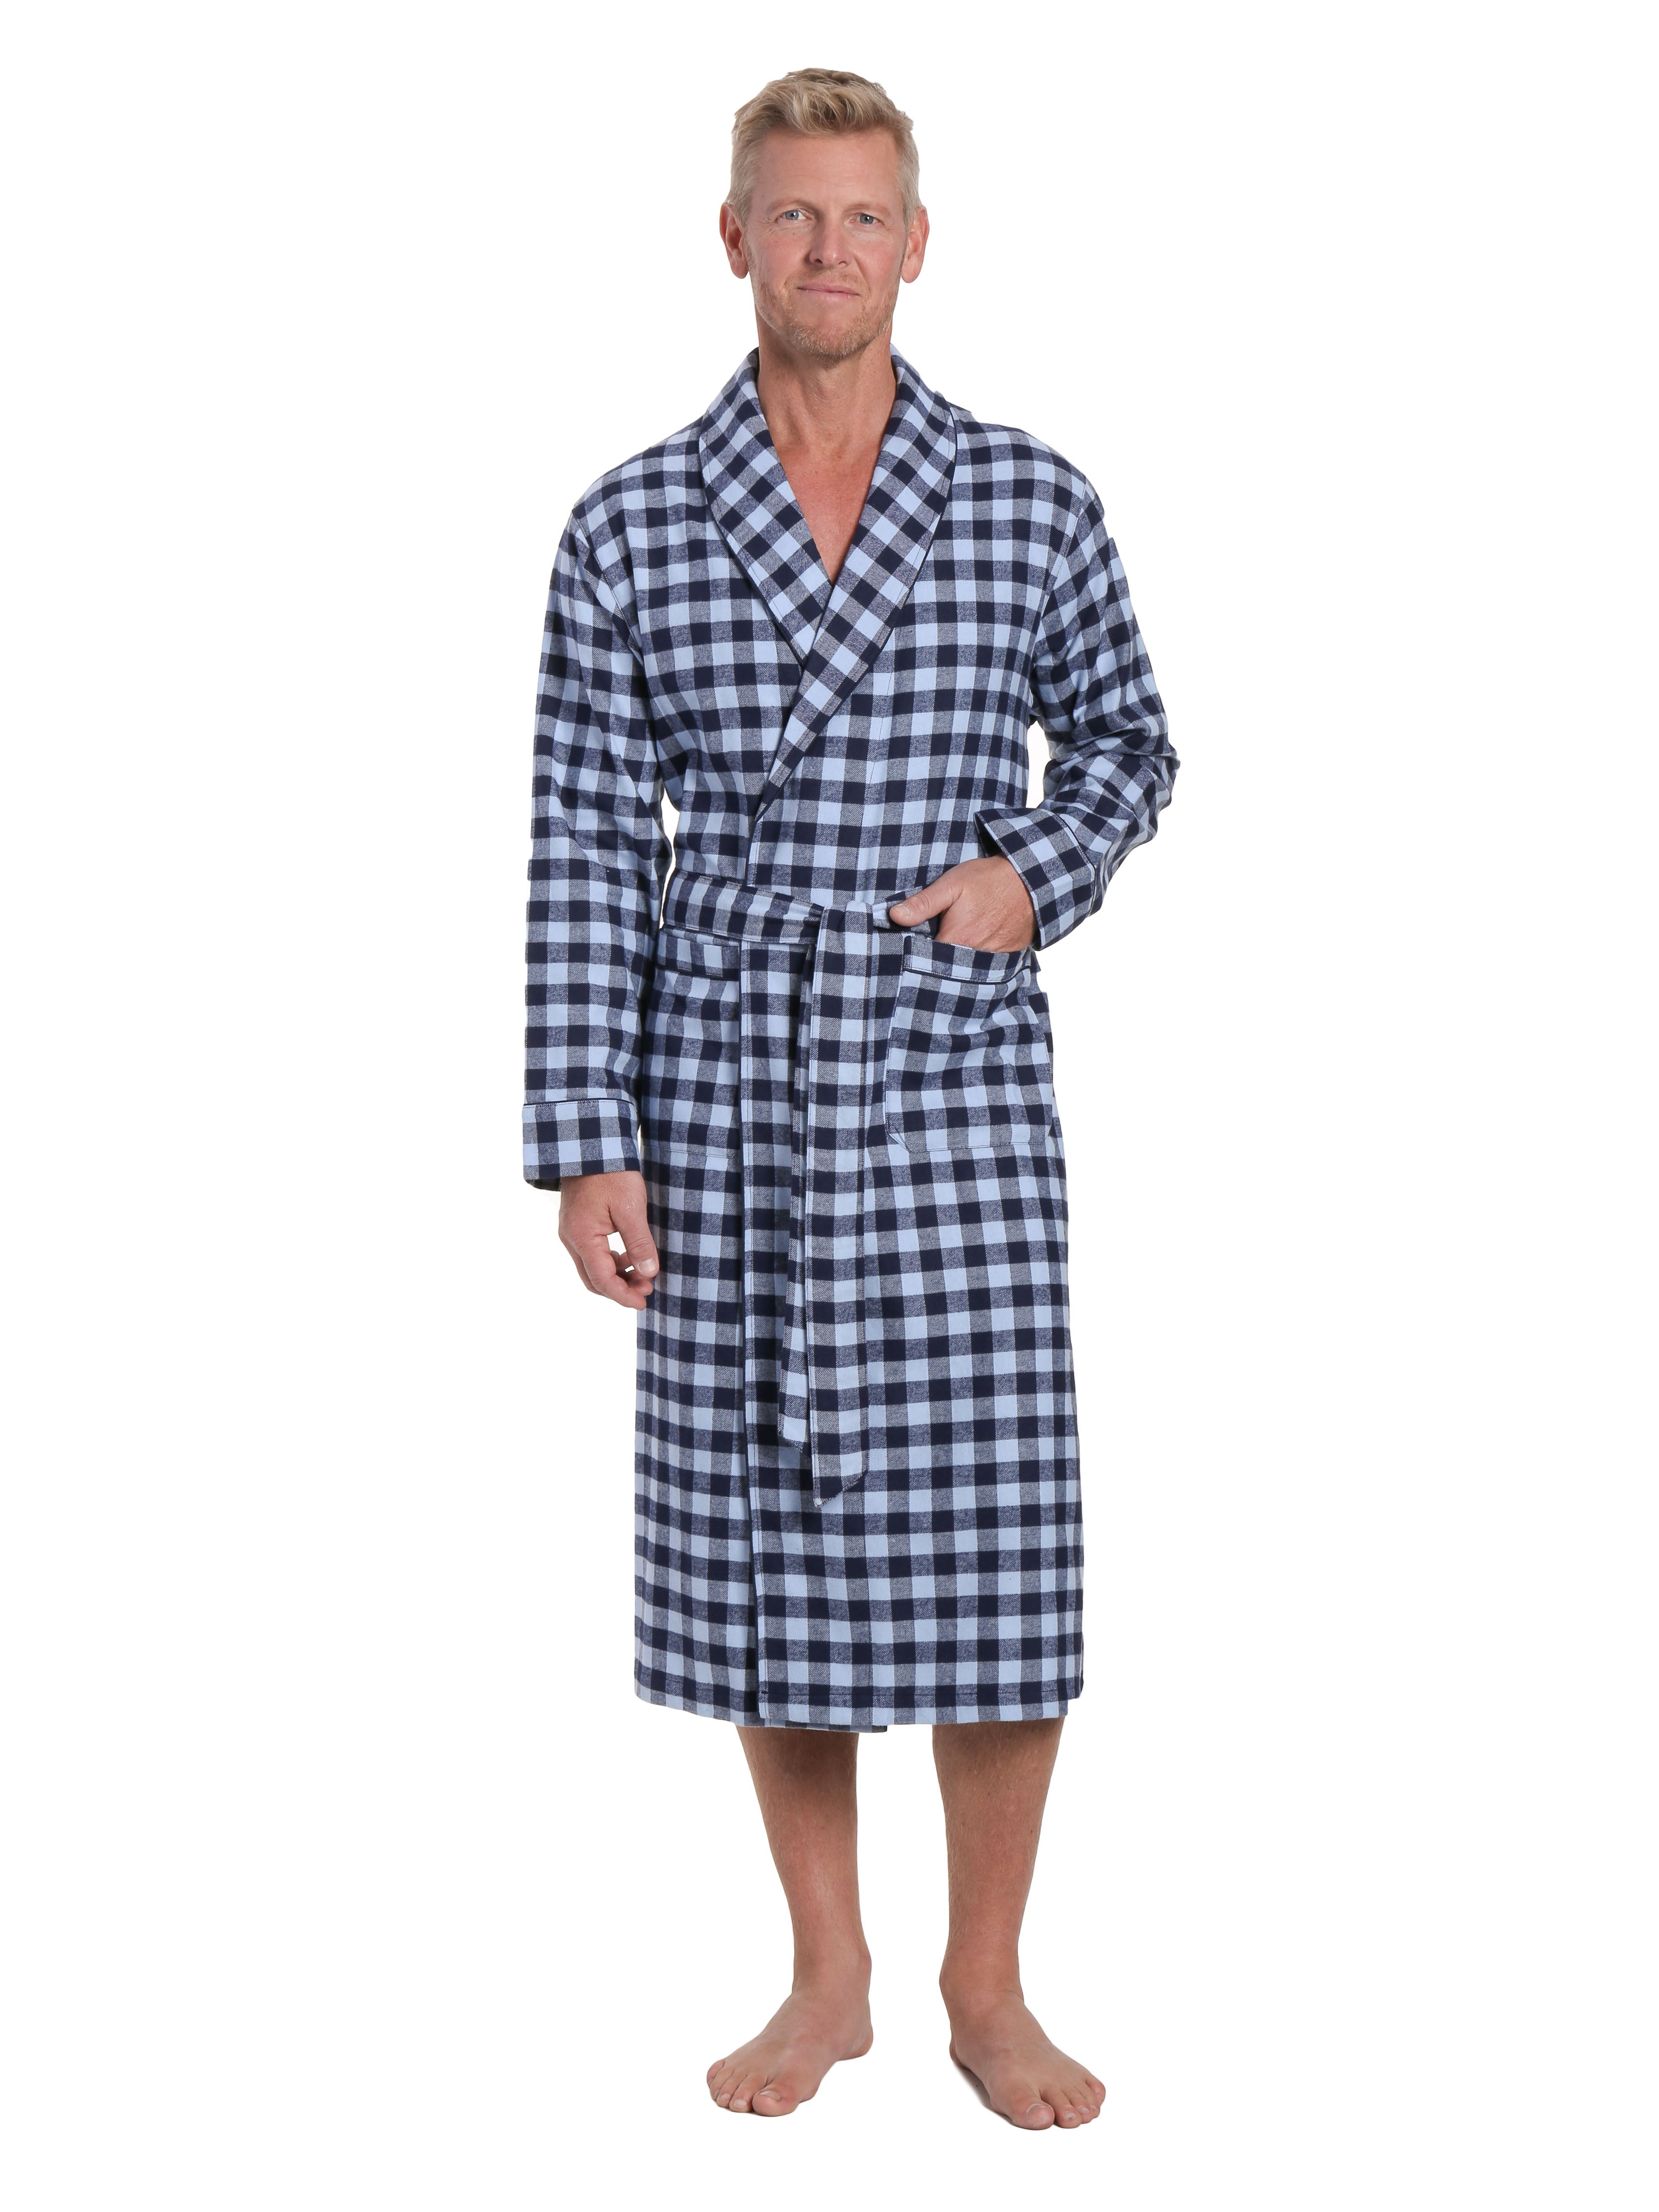 Mens Premium 100% Cotton Flannel Robe - Gingham Checks - Navy Blue